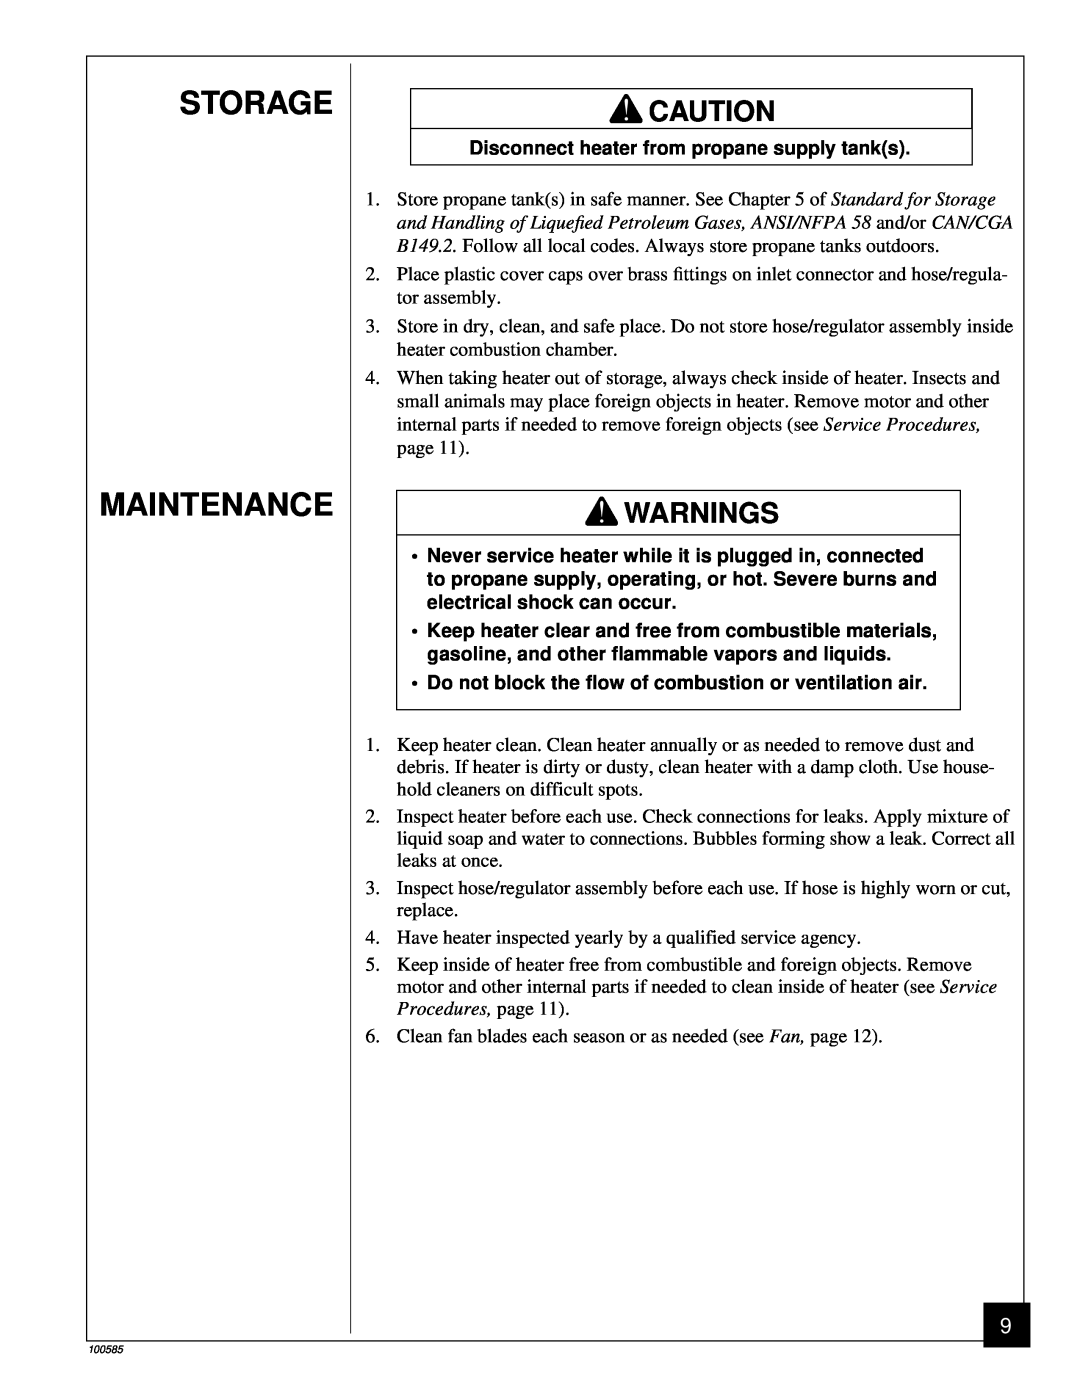 Desa BLP155AT owner manual Storage Maintenance, Warnings, Disconnect heater from propane supply tanks 